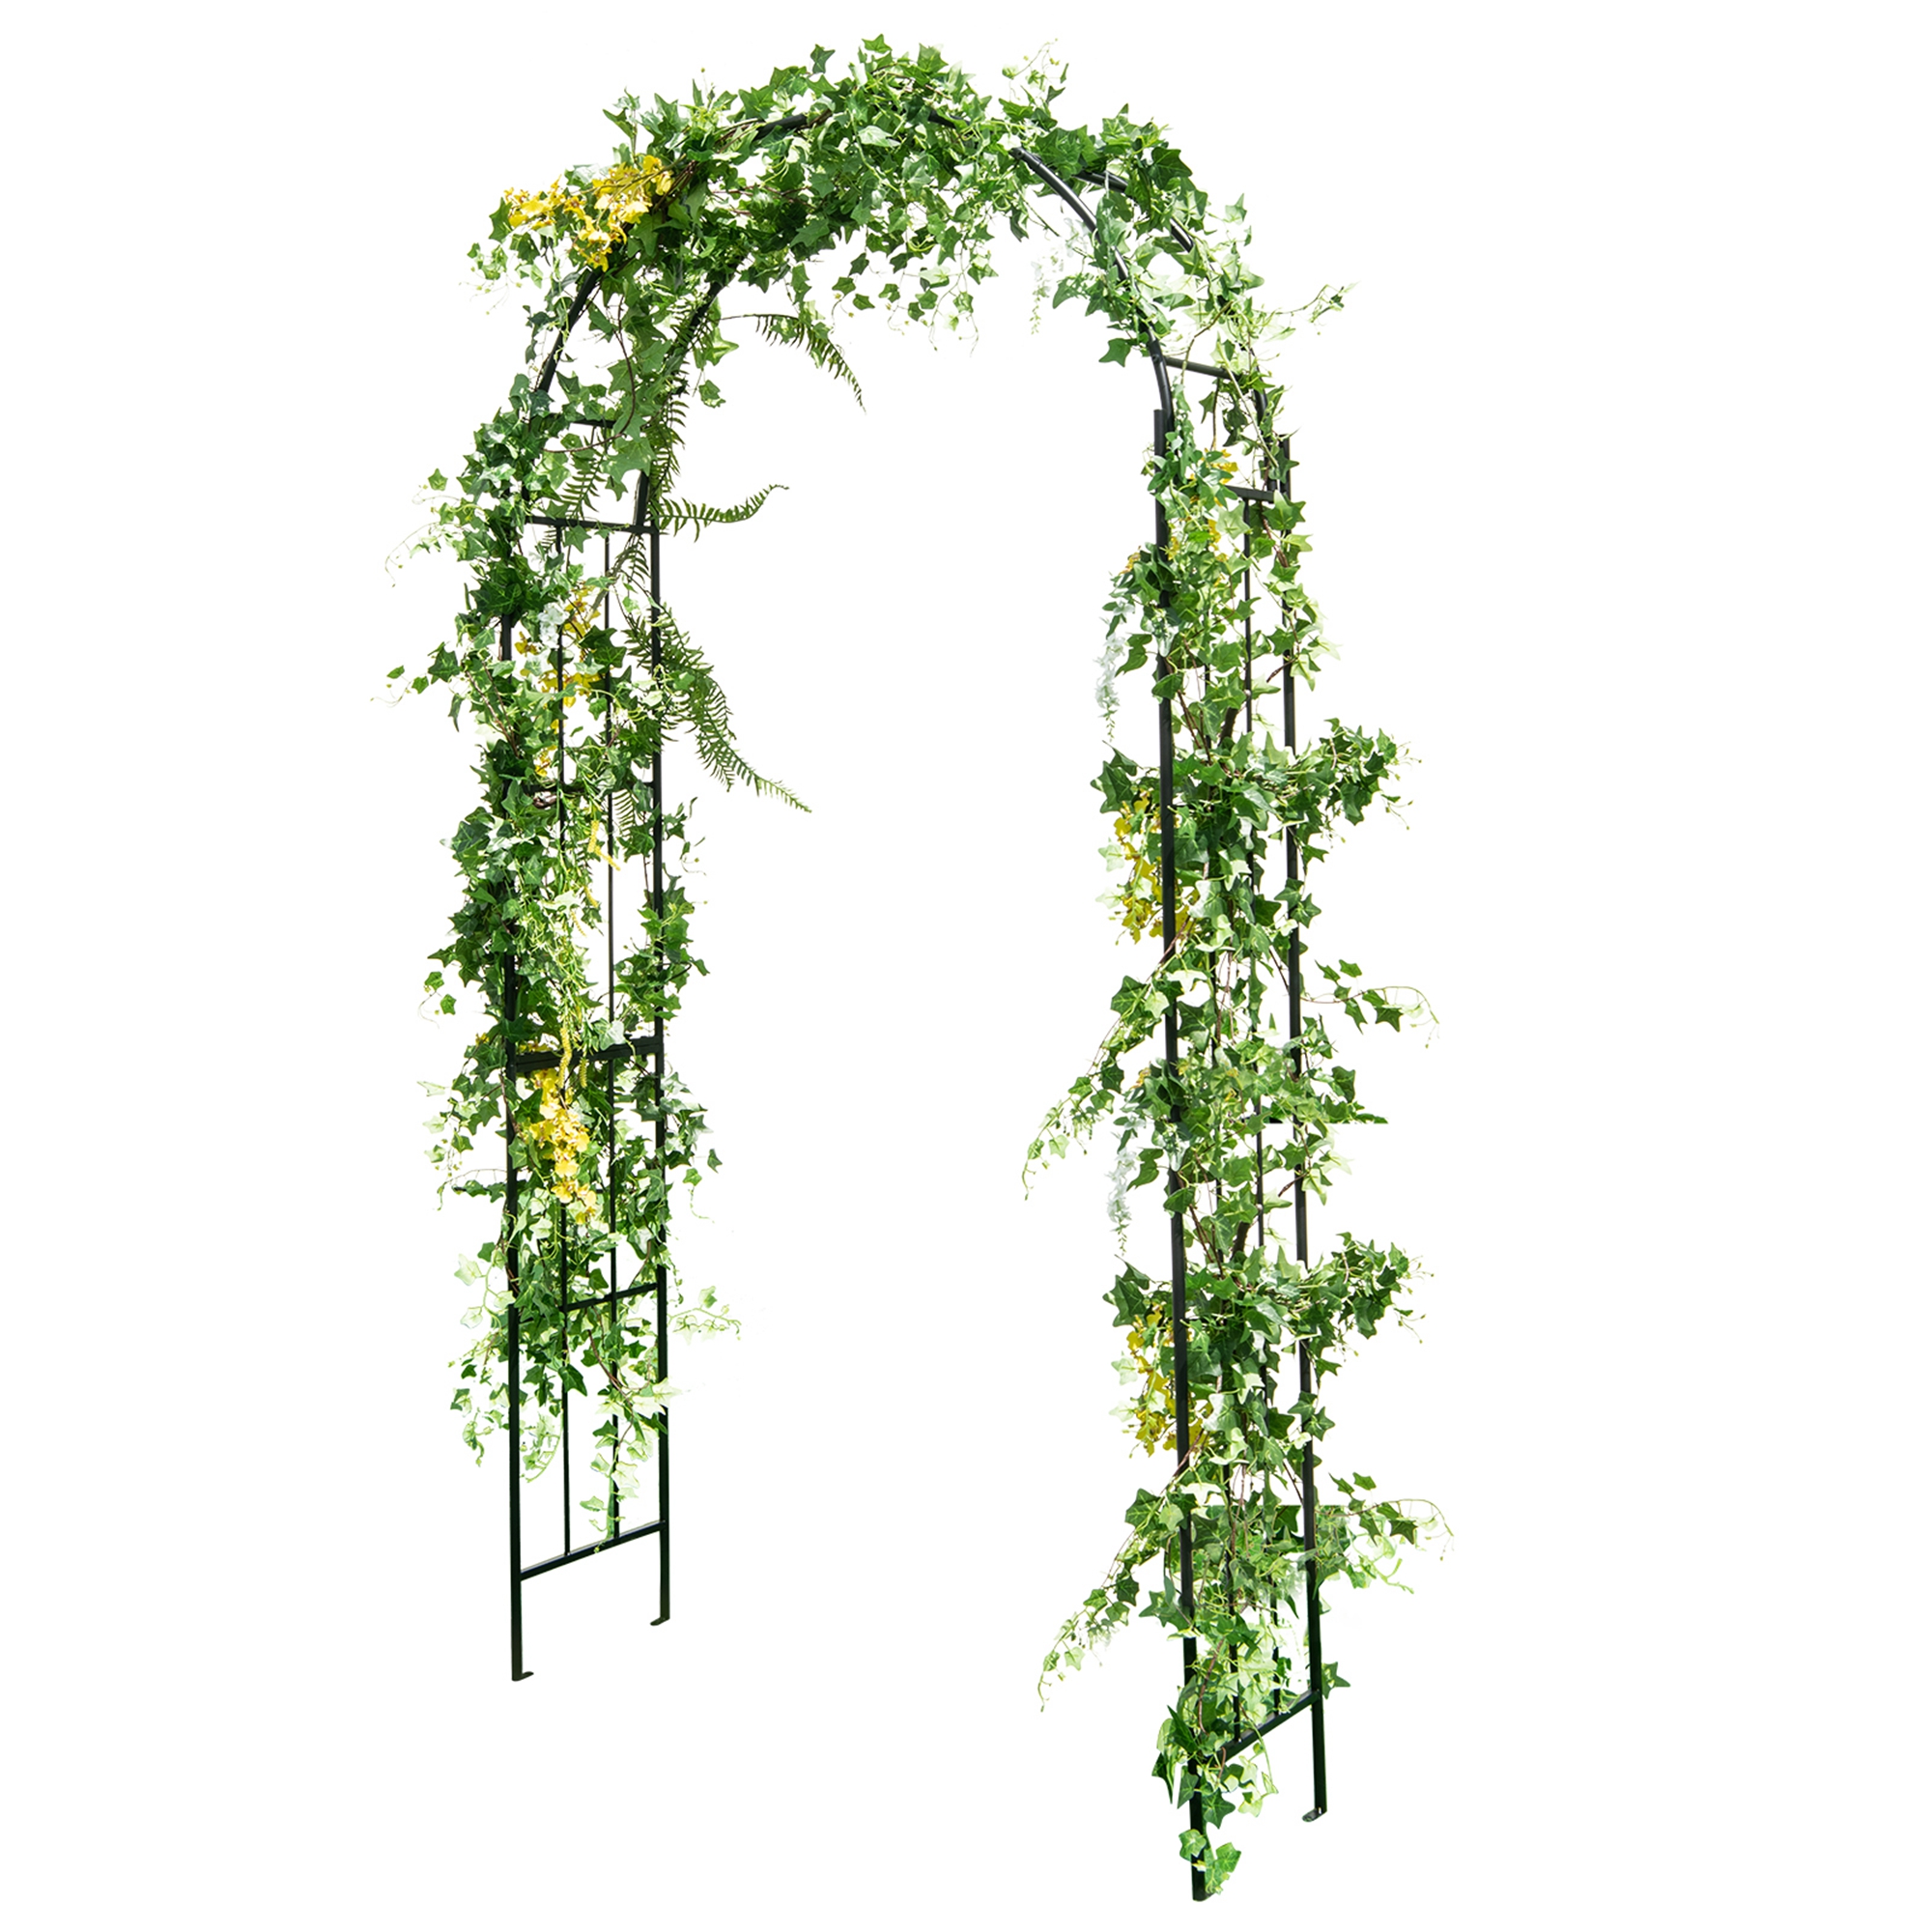 Costway Garden Arch Arbor Trellis Pergola 7.5 ft Metal Archway for Climbing Plants Party